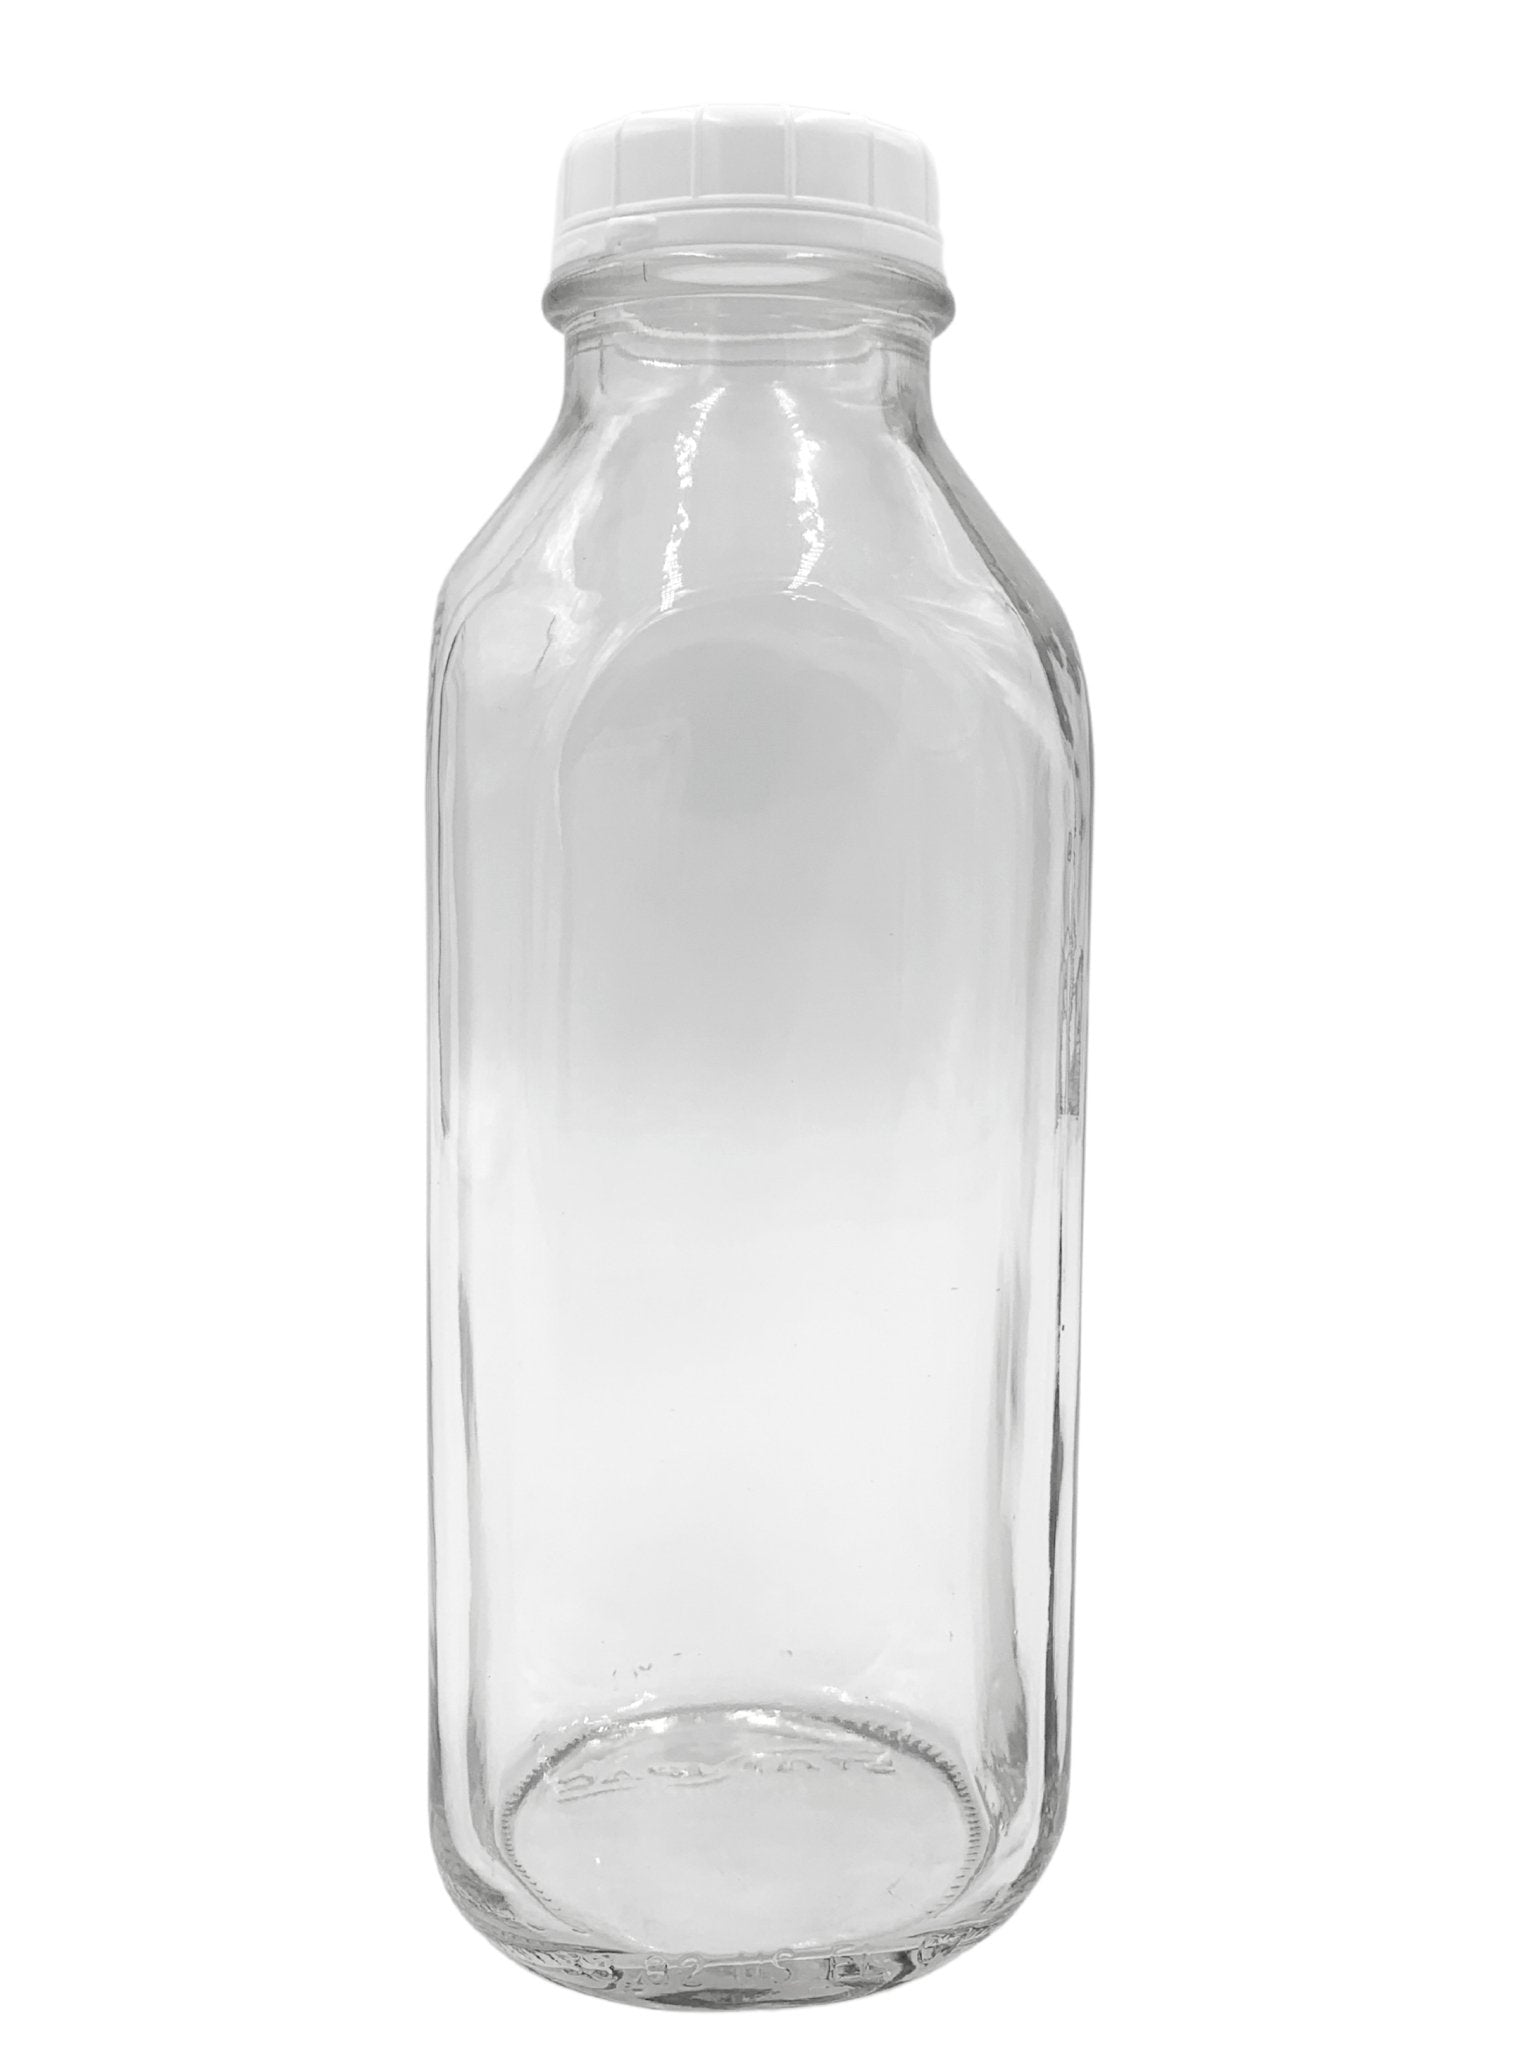 8 Pcs Clear Water Bottle Milk Bottle Household Juice Bottles Bulk